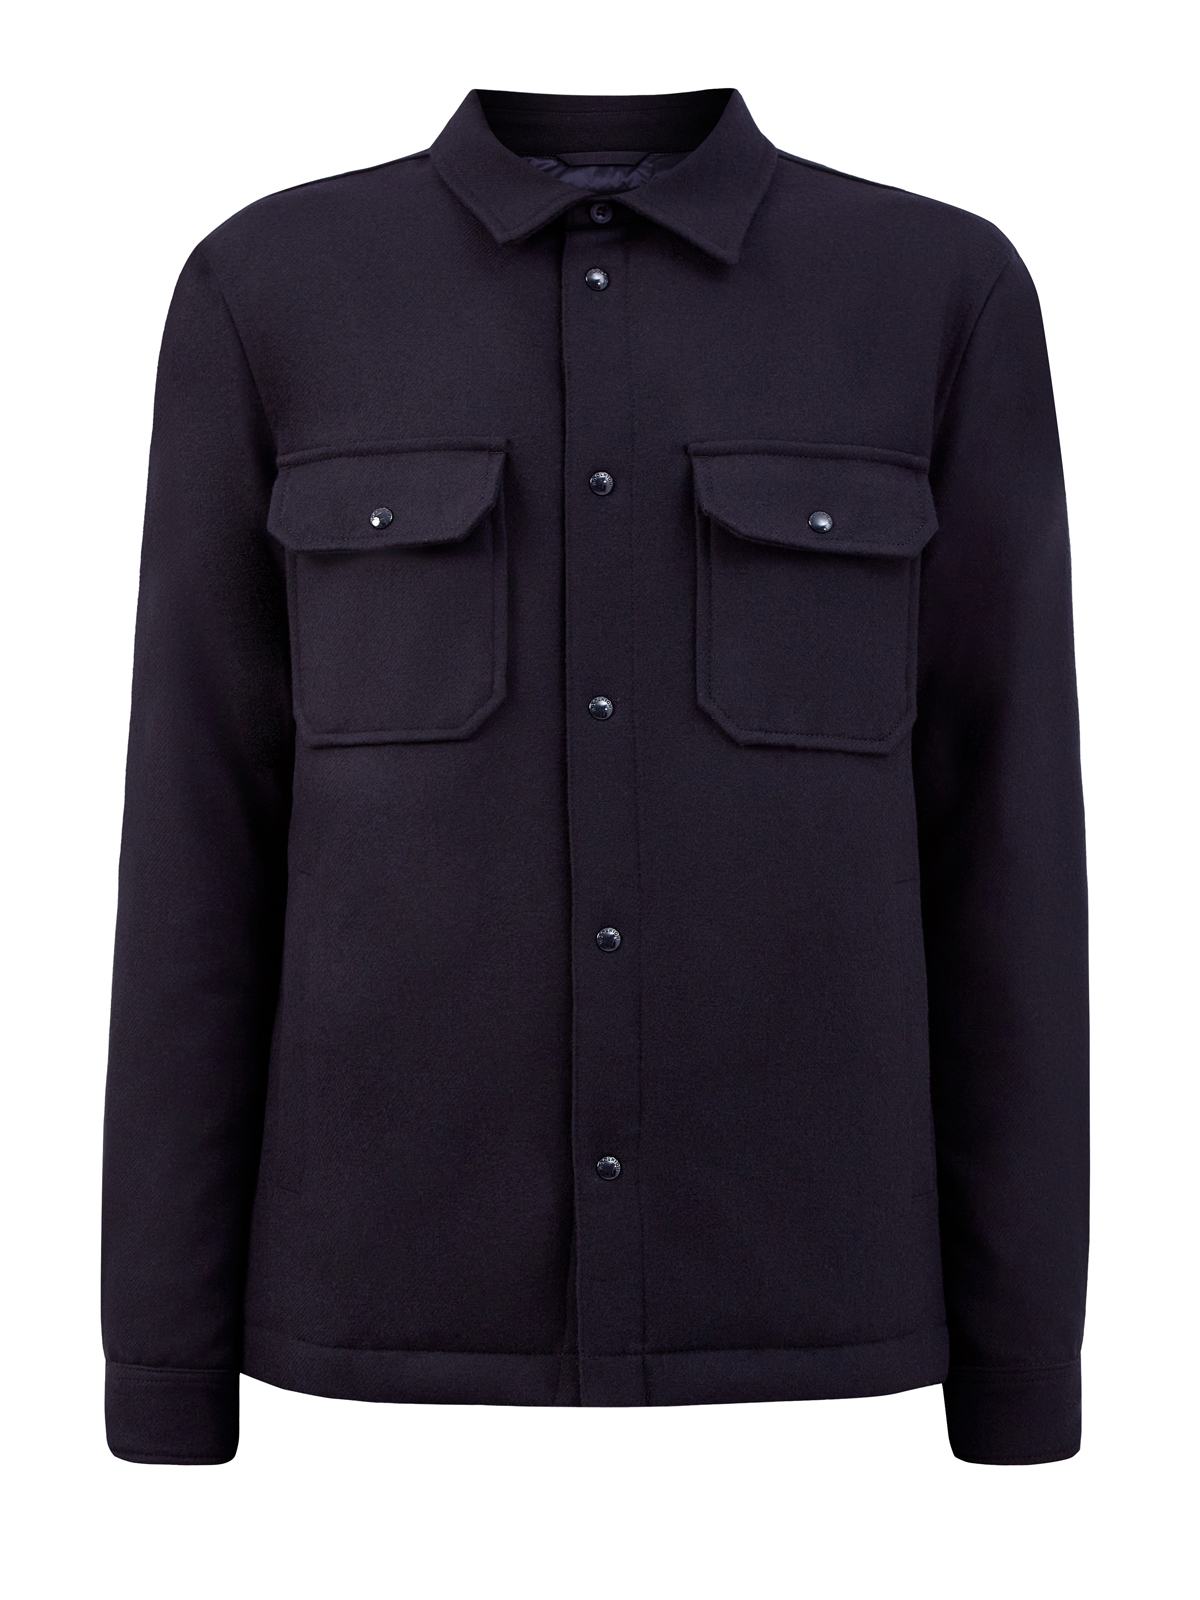 Куртка-рубашка из шерсти Melton с пуховым утеплителем WOOLRICH, цвет синий, размер M;L;S;XL - фото 1